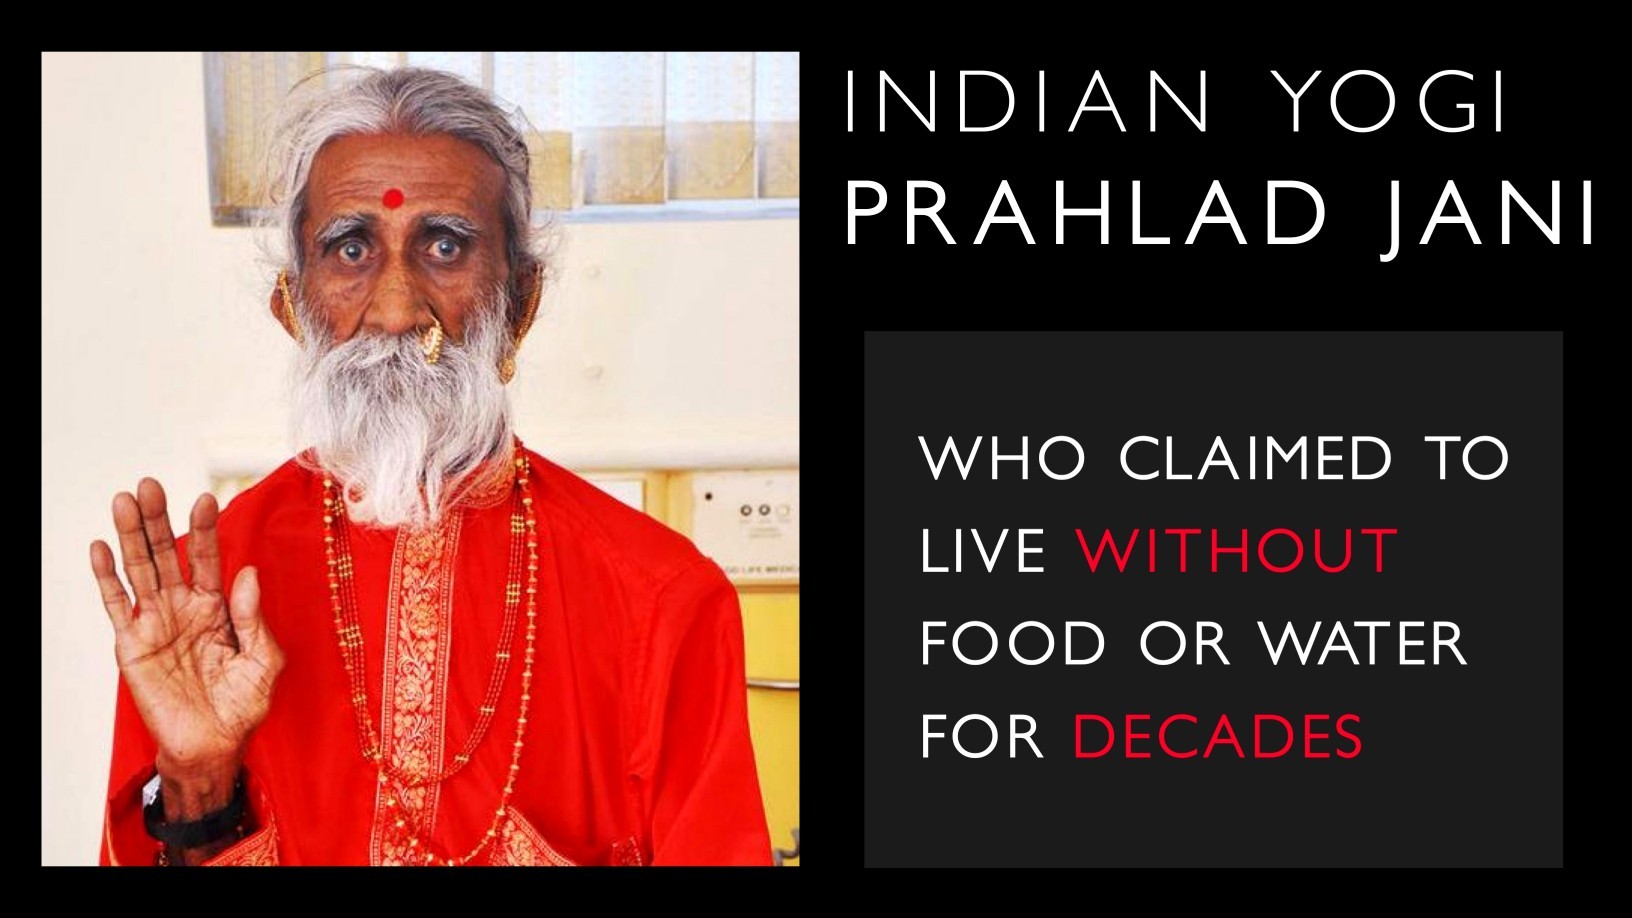 Prahlad Jani – 수십 년 동안 음식이나 물 없이 살았다고 주장한 인도 요기 2